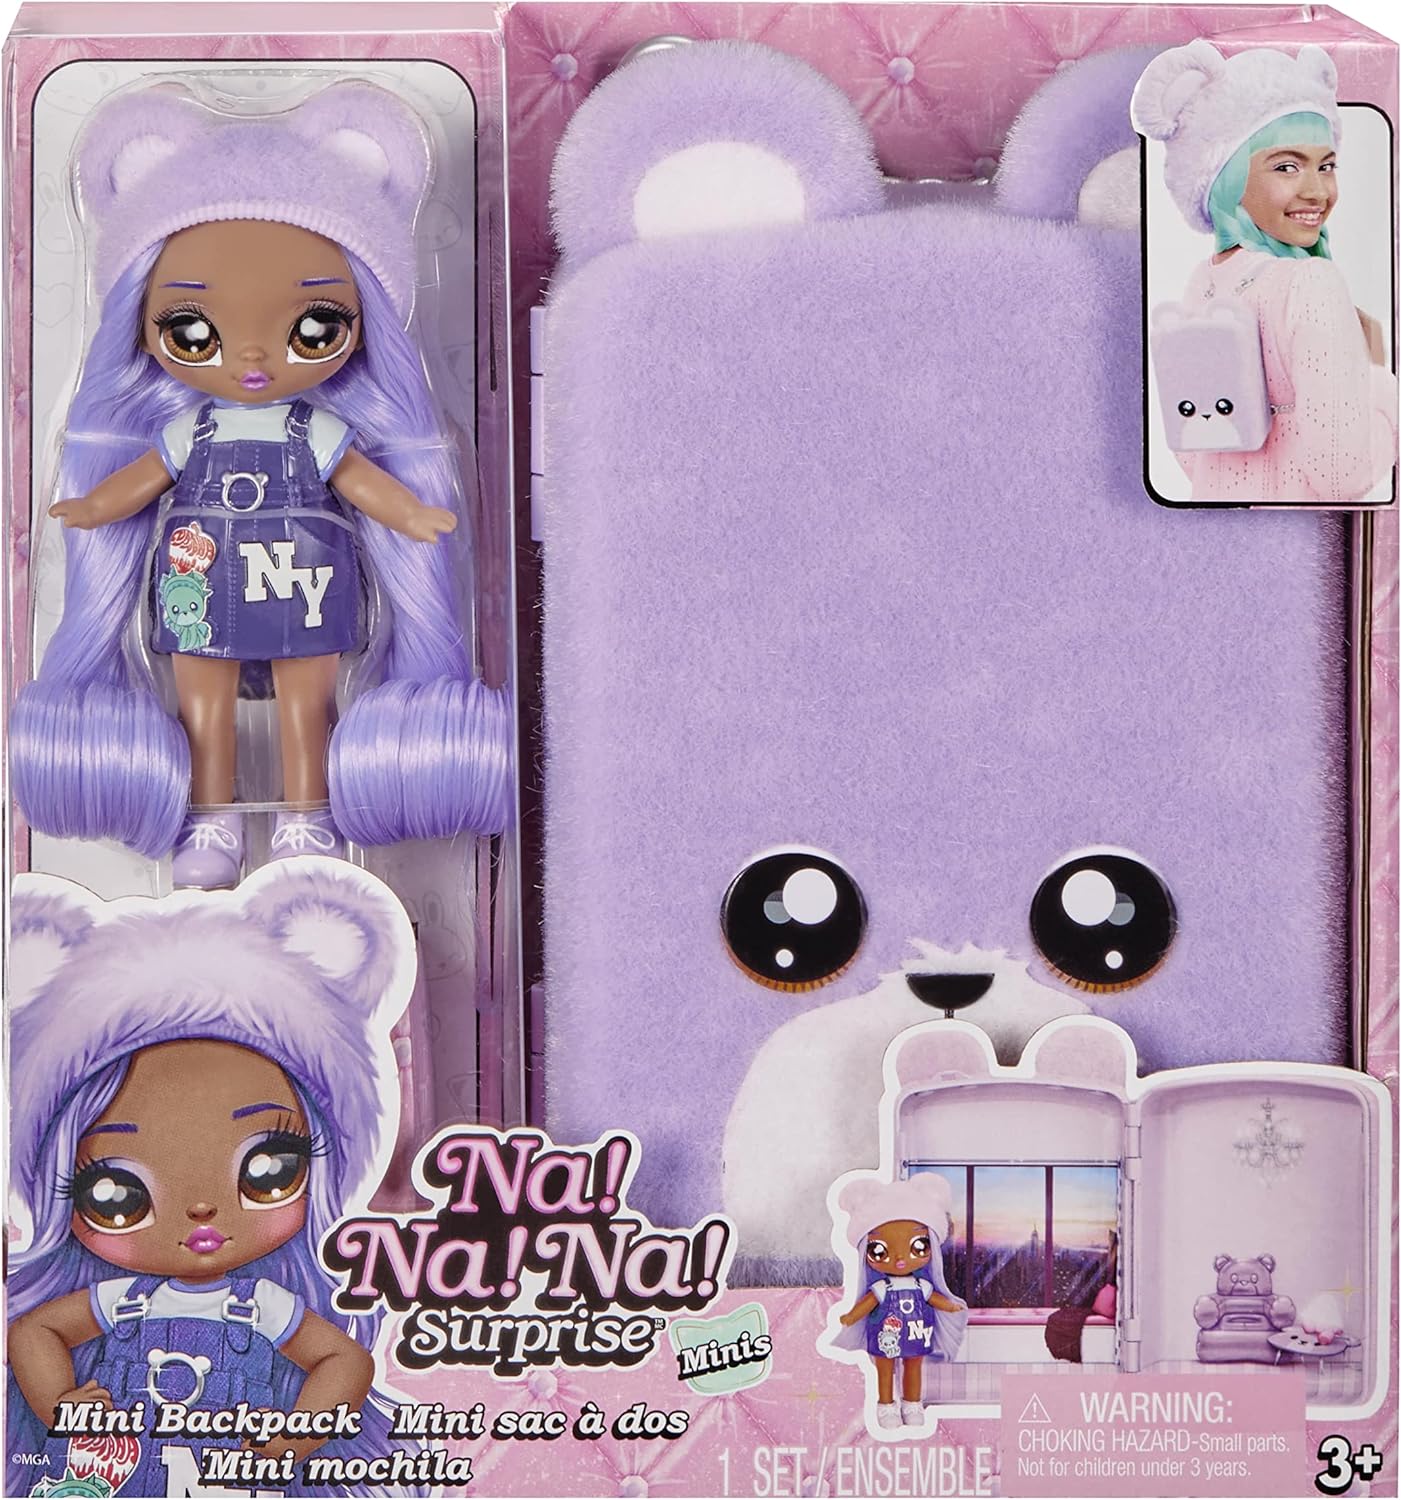 Na! Na! Na! Surprise Mini Backpack Bedroom Lizzy York Fashion Doll, Fuzzy Purple Bear Backpack, Gift for Kids